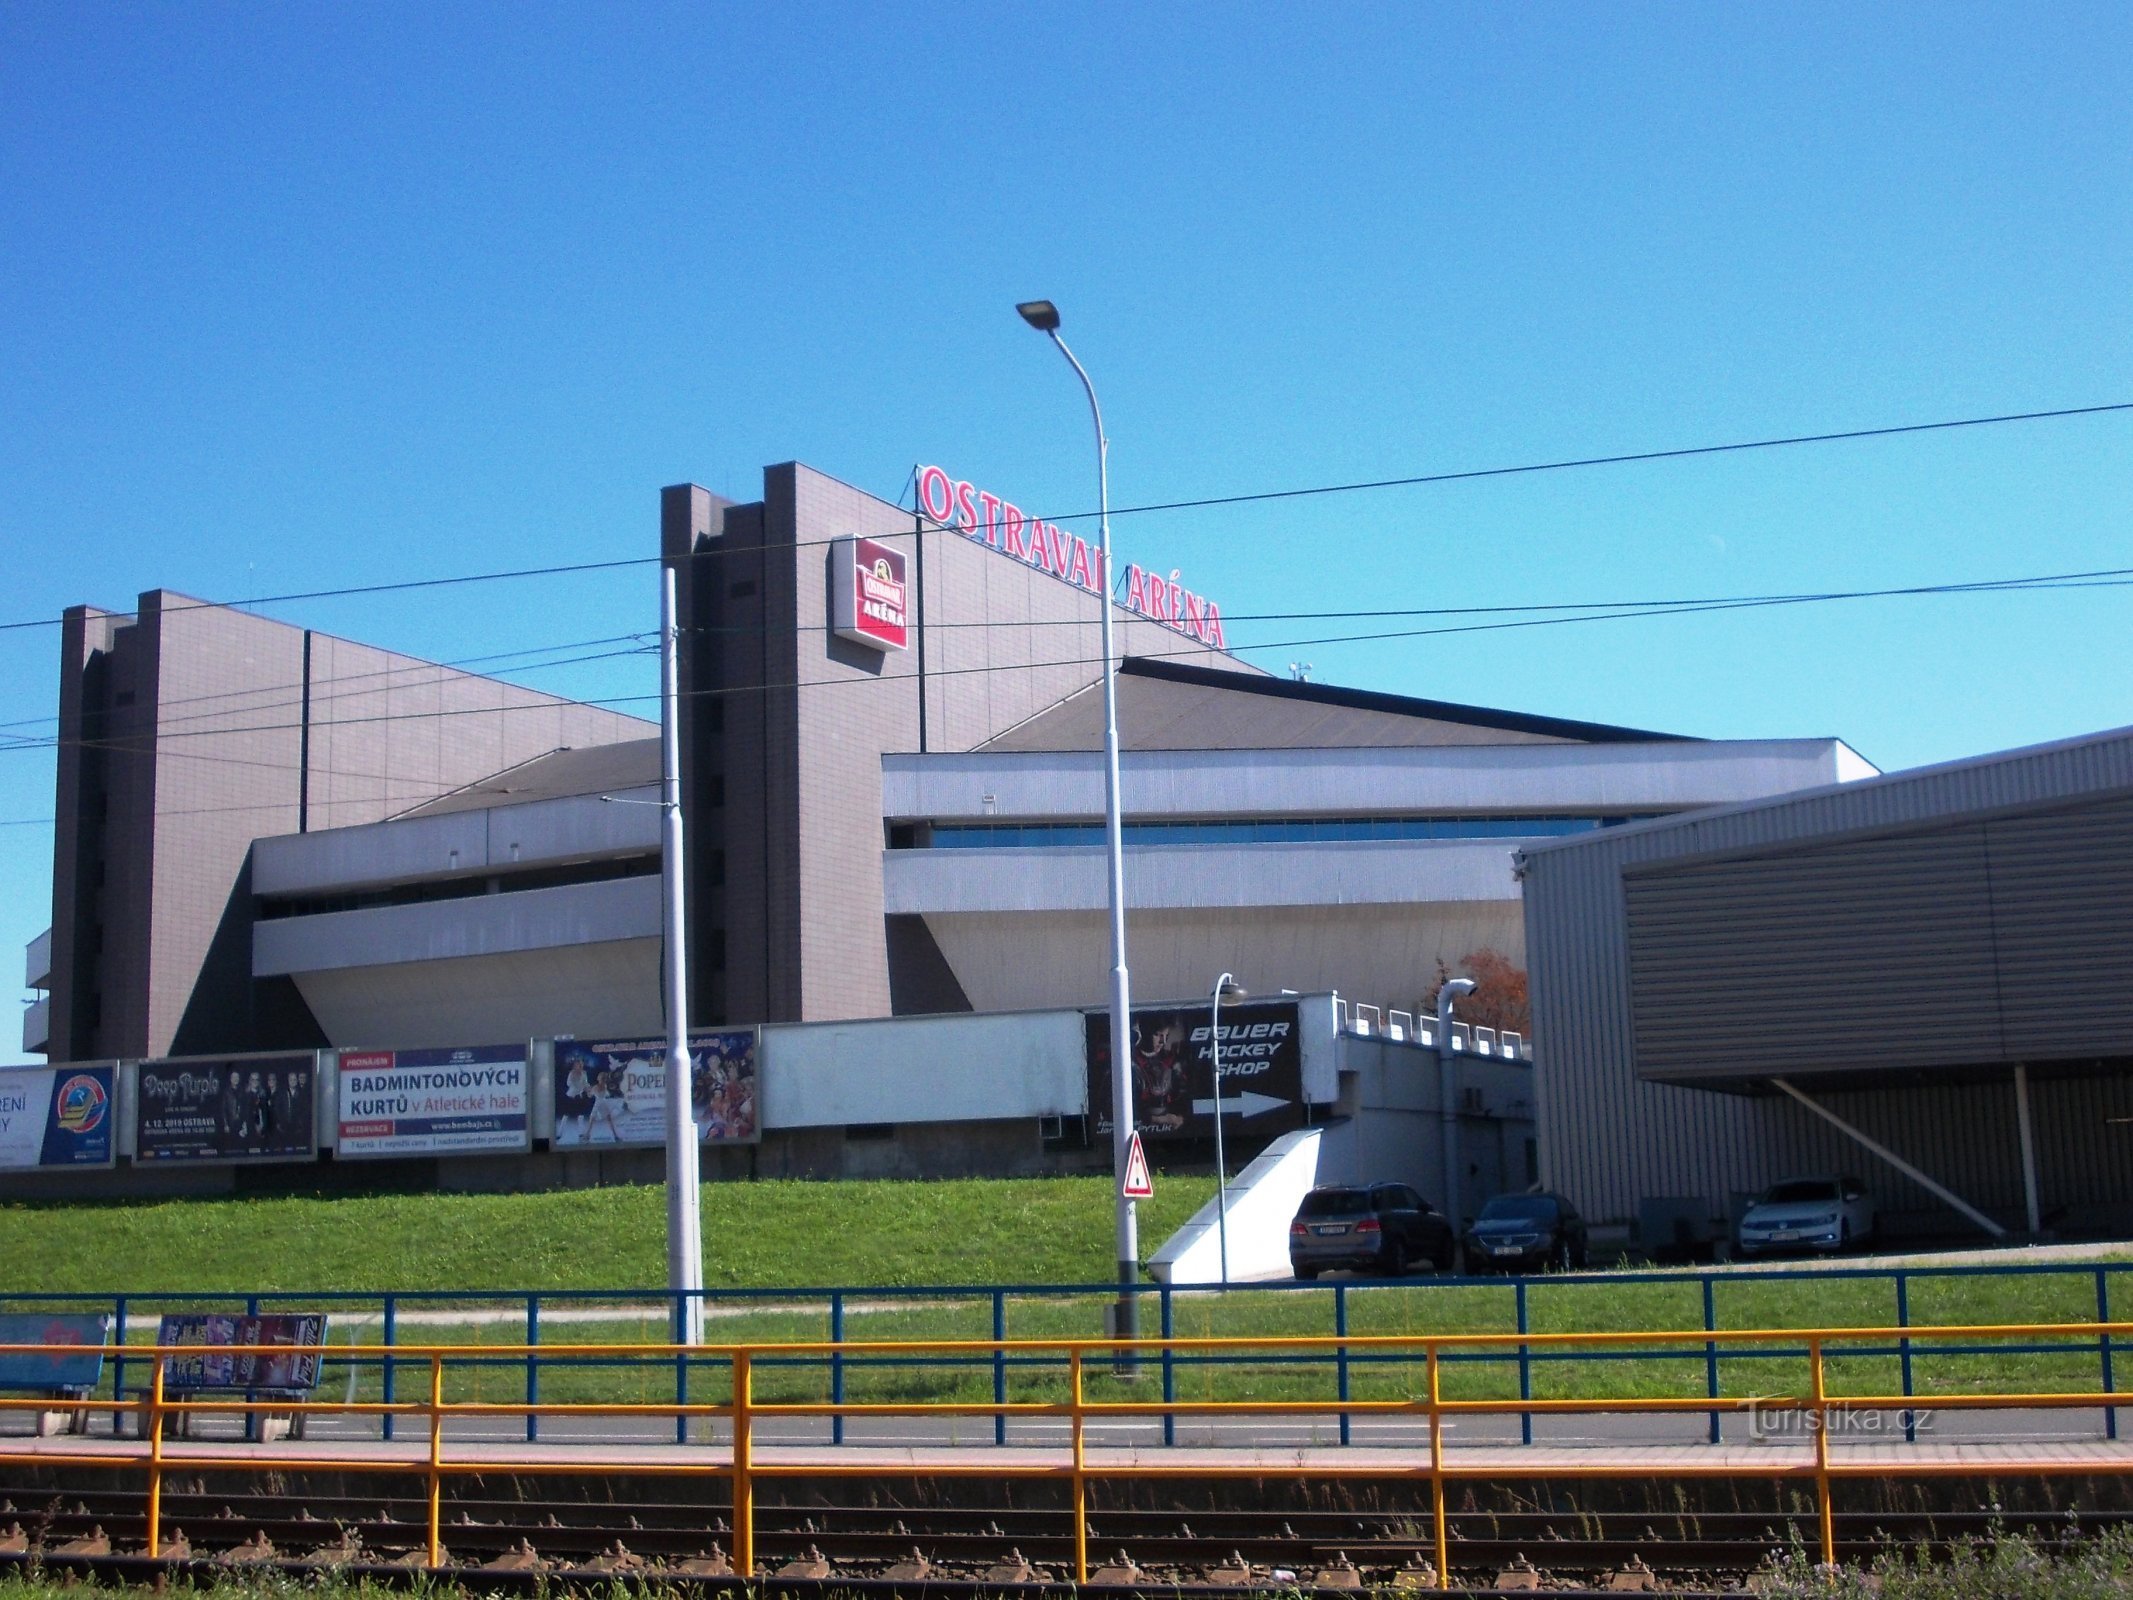 Ostravar Arena - τα τελετουργικά εγκαίνια έγιναν το 1986